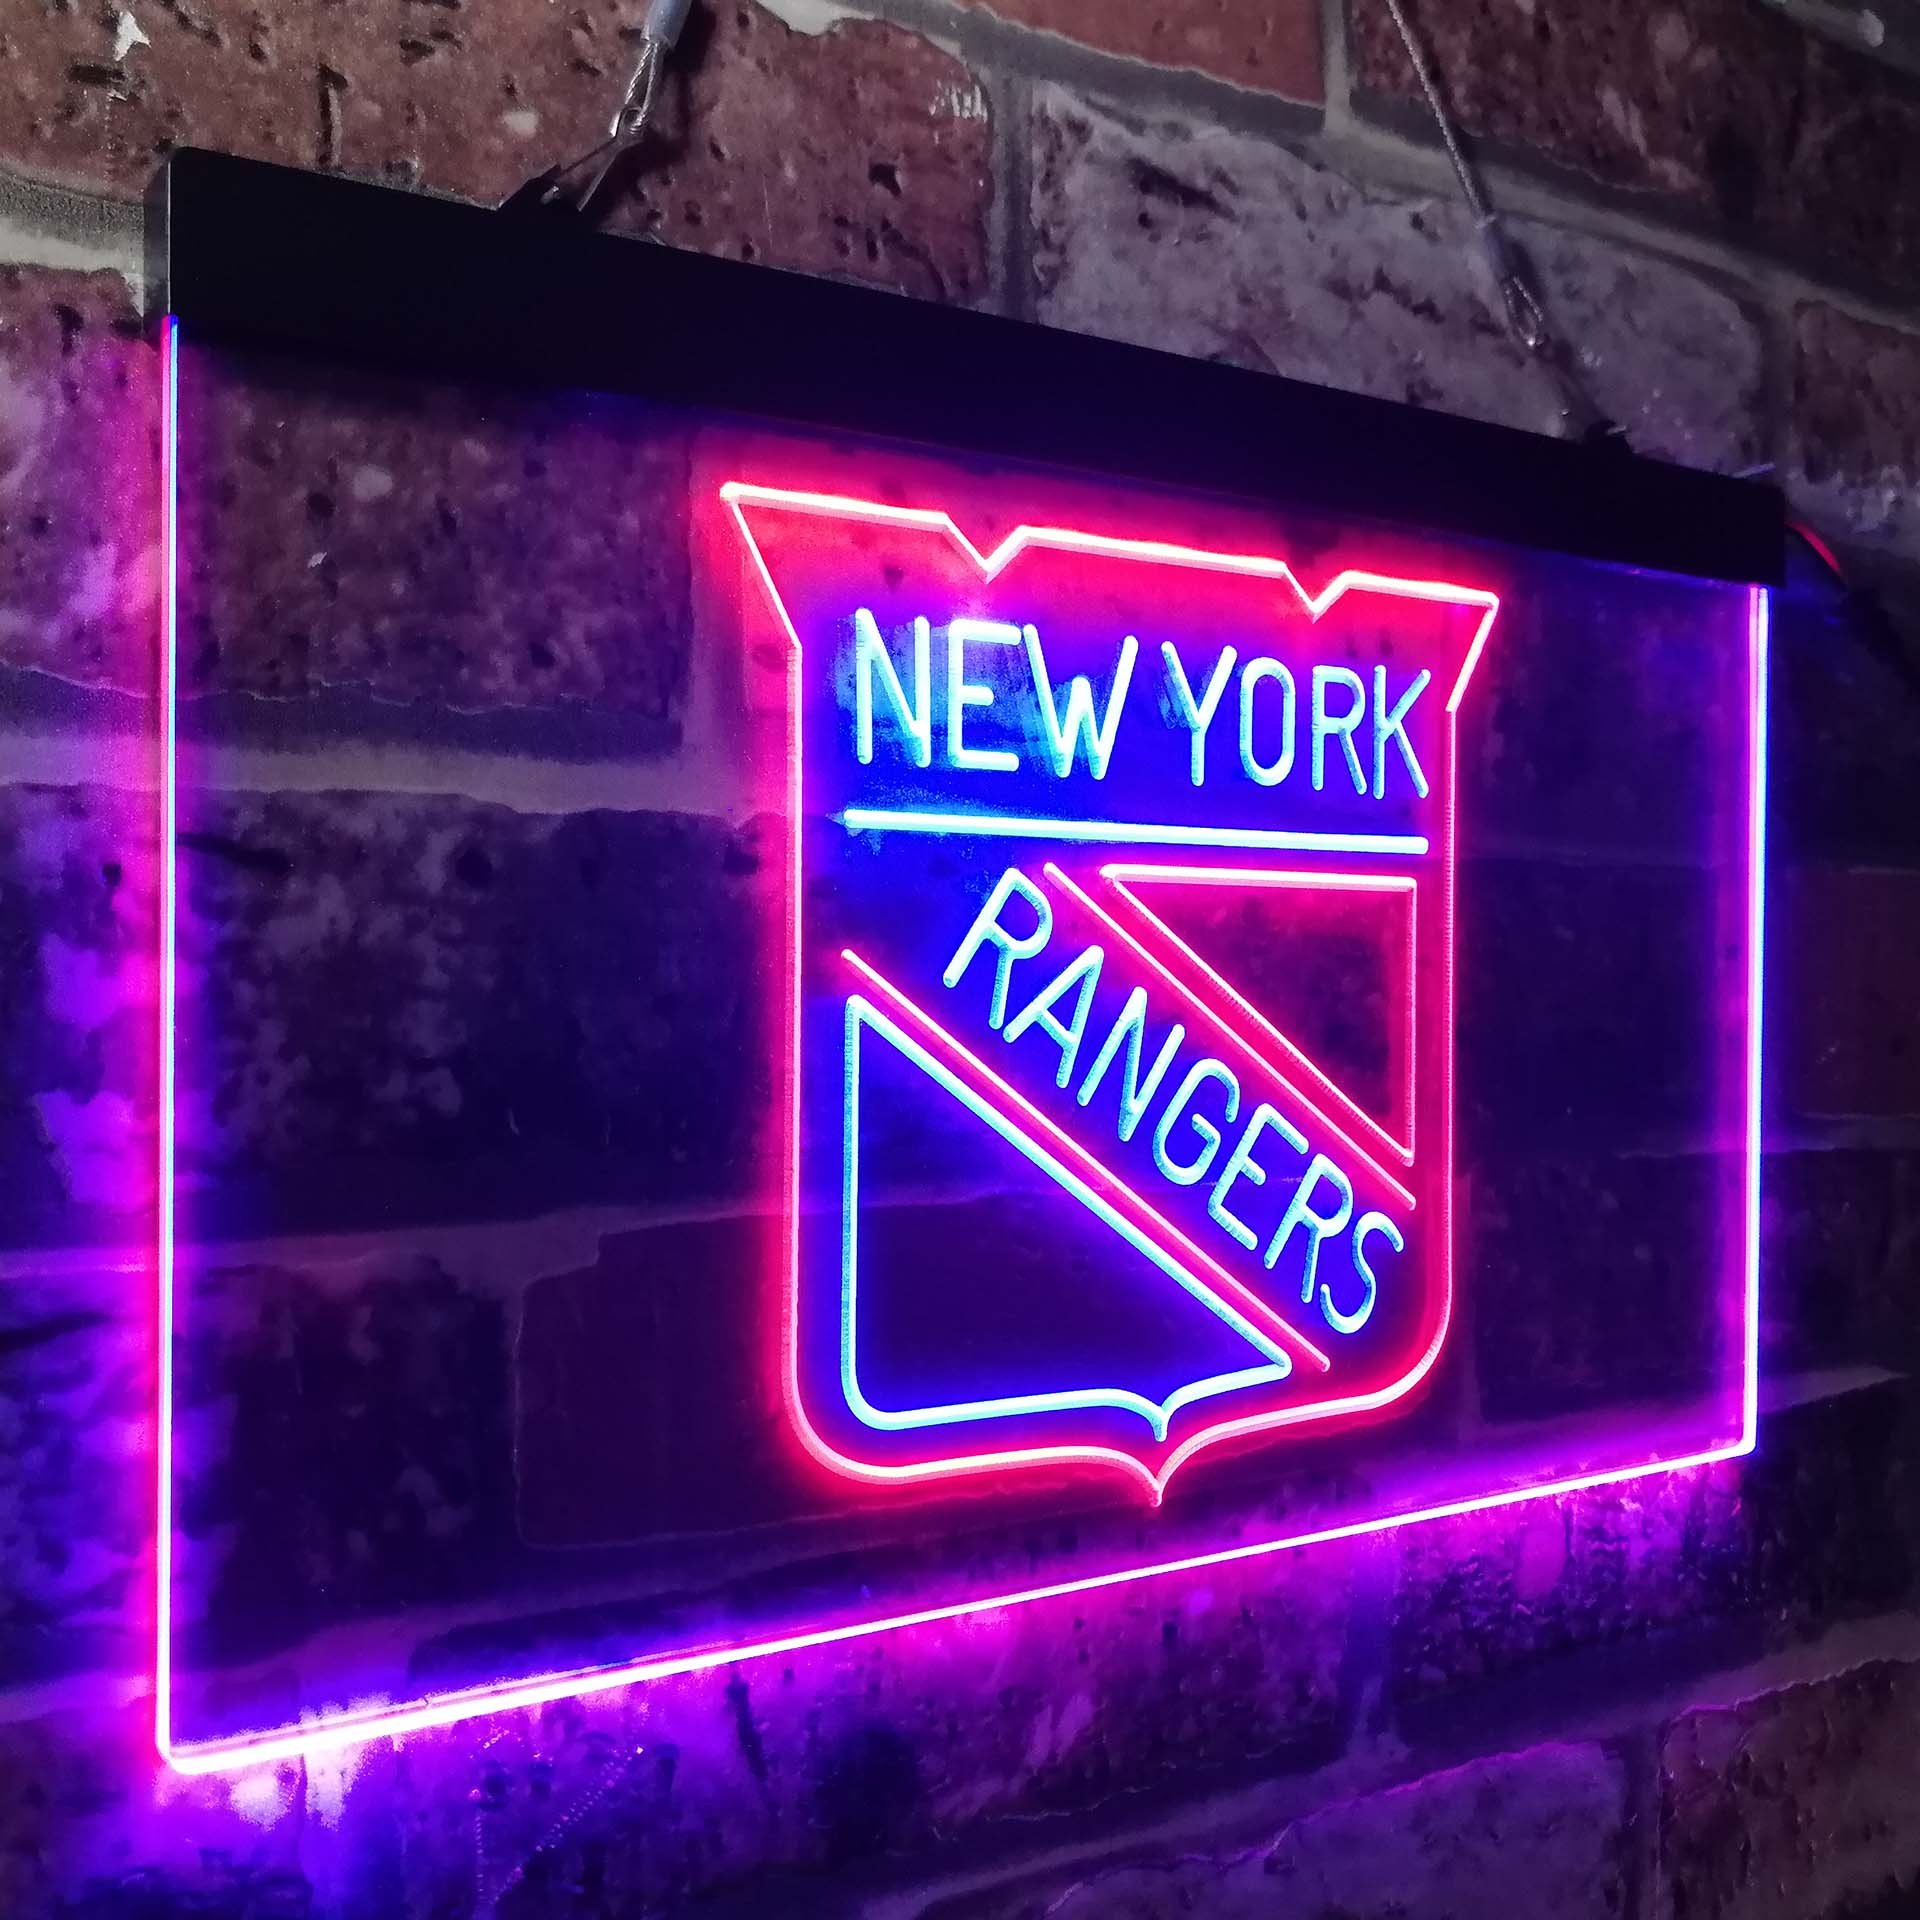 New York Rangers Liberty LED Neon Sign - Legacy Edition